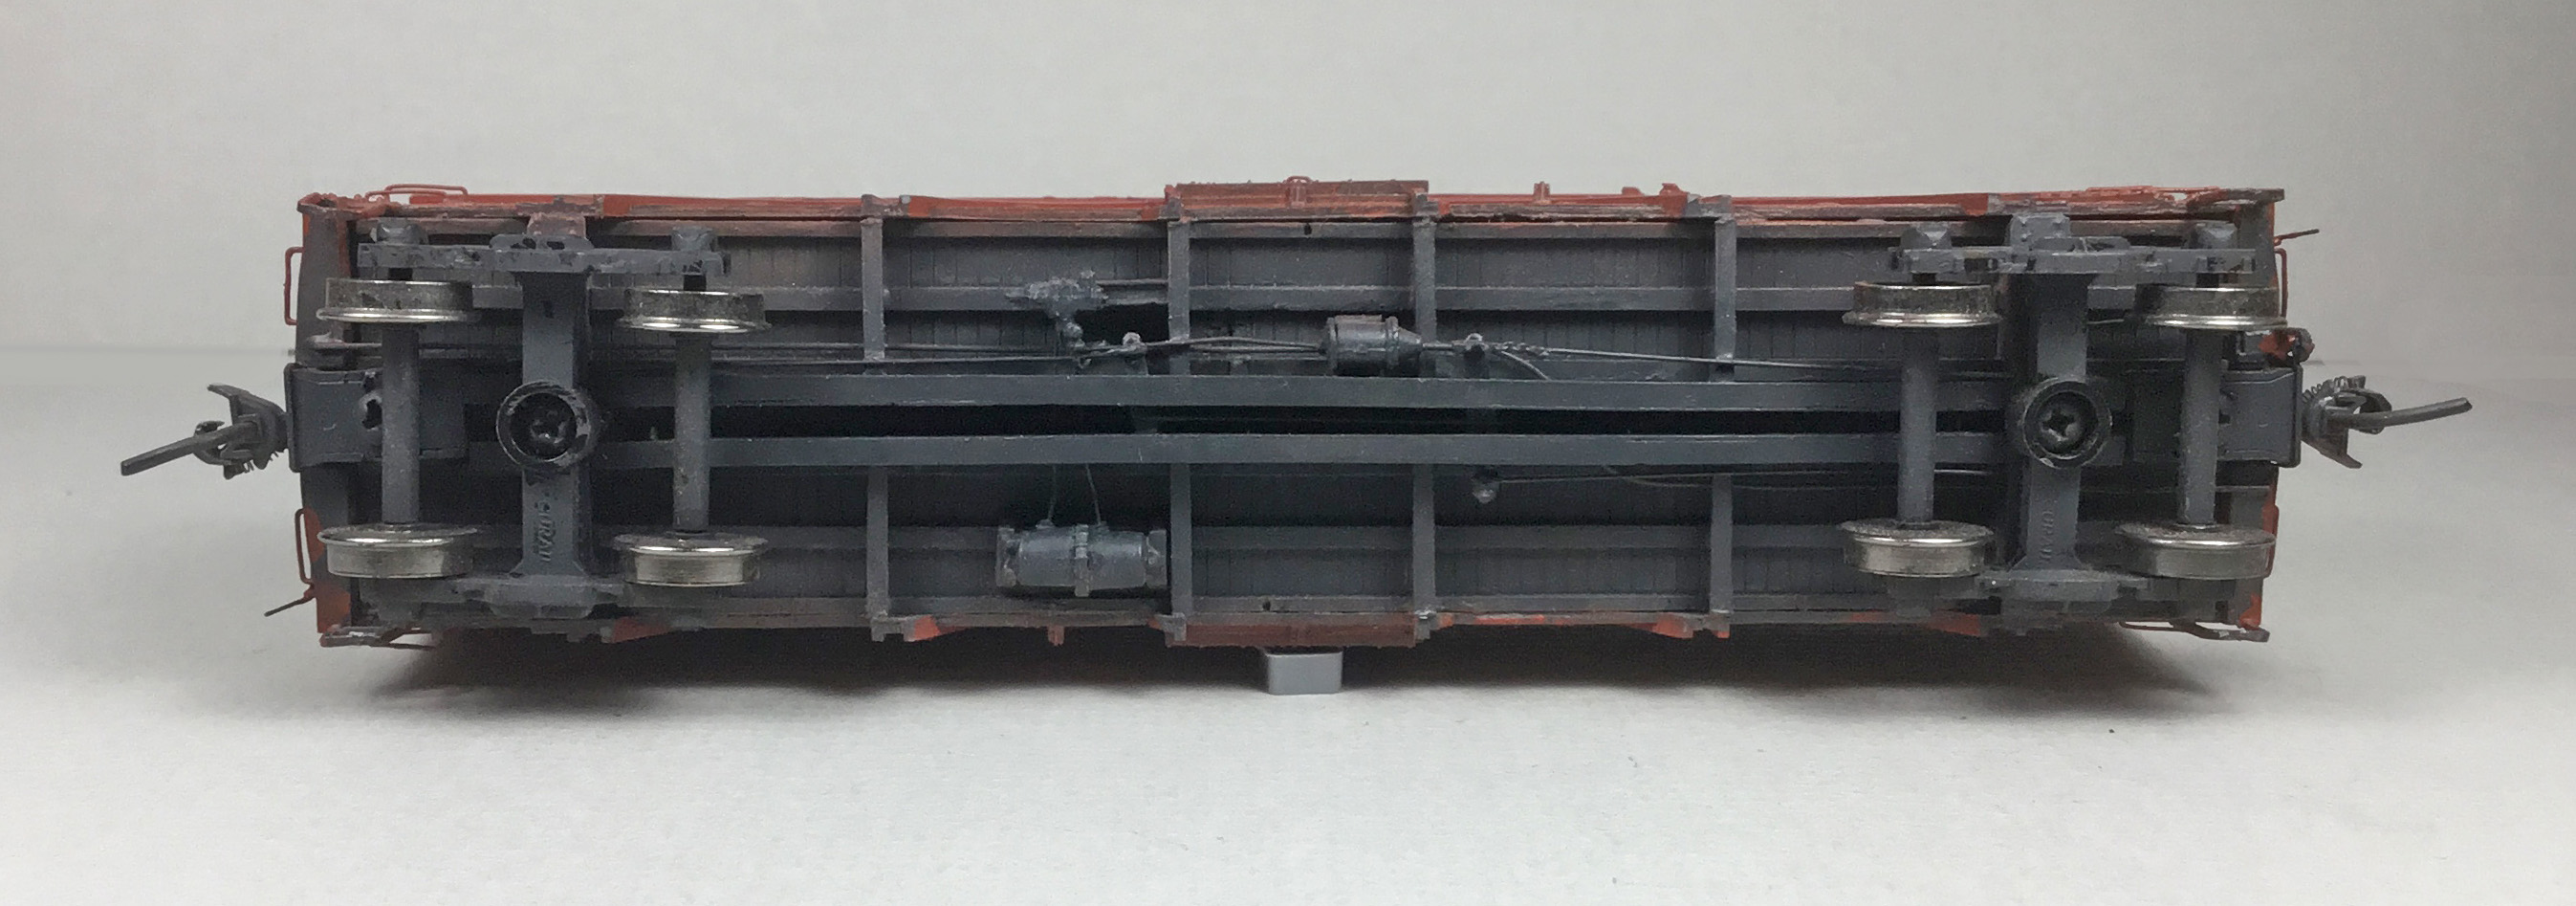 Minneapolis & Northland Railroad Company Modeling: Soo Line Box Car 39334